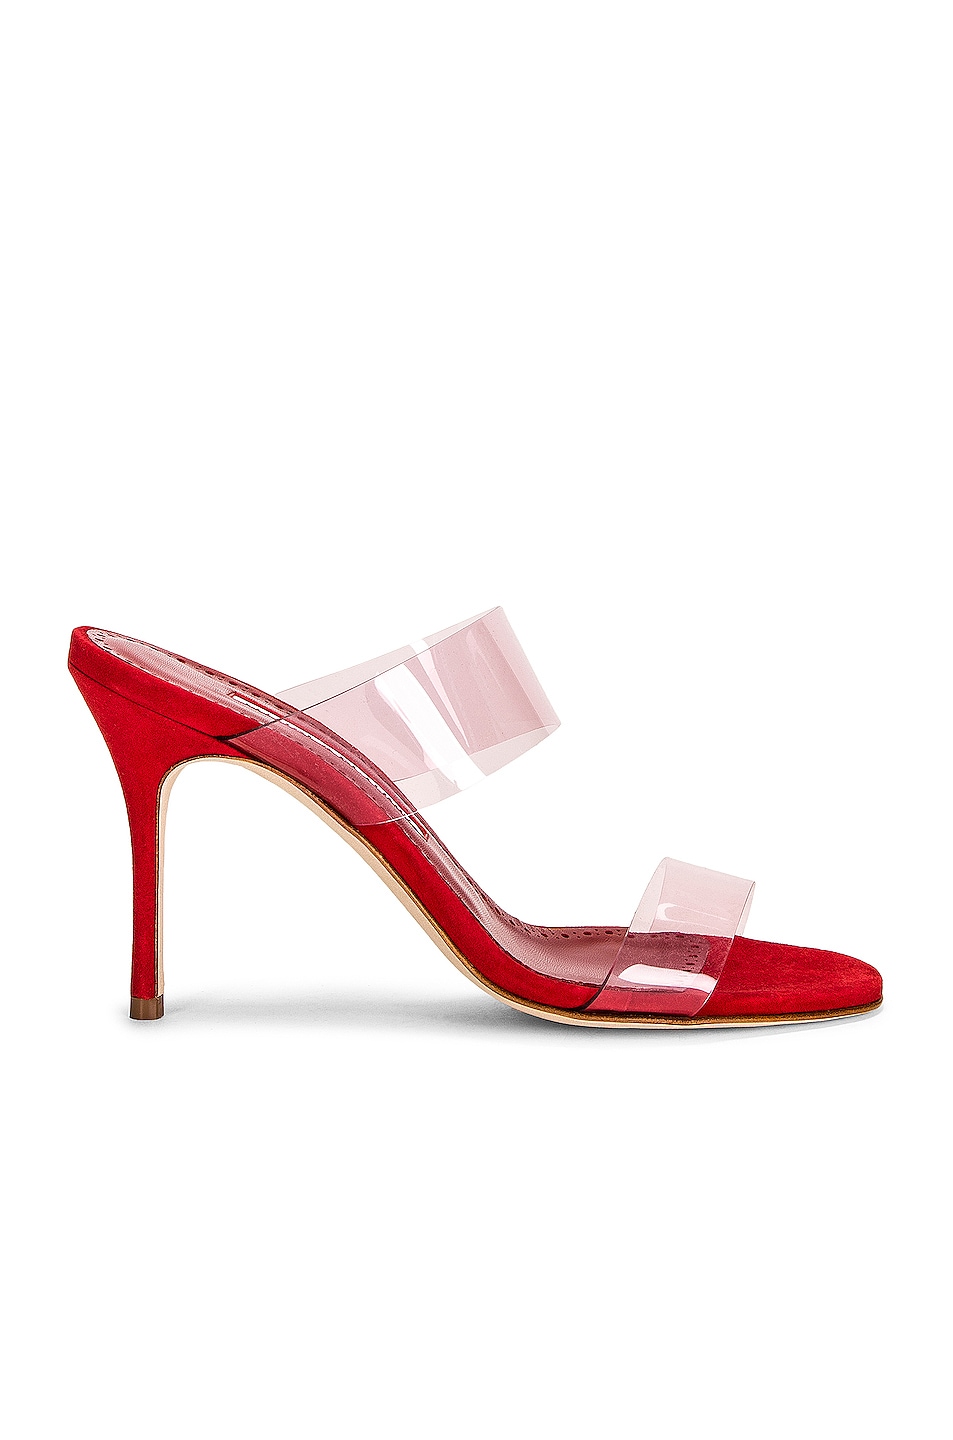 Image 1 of Manolo Blahnik Scolto 90 Sandal in Red & Light PInk